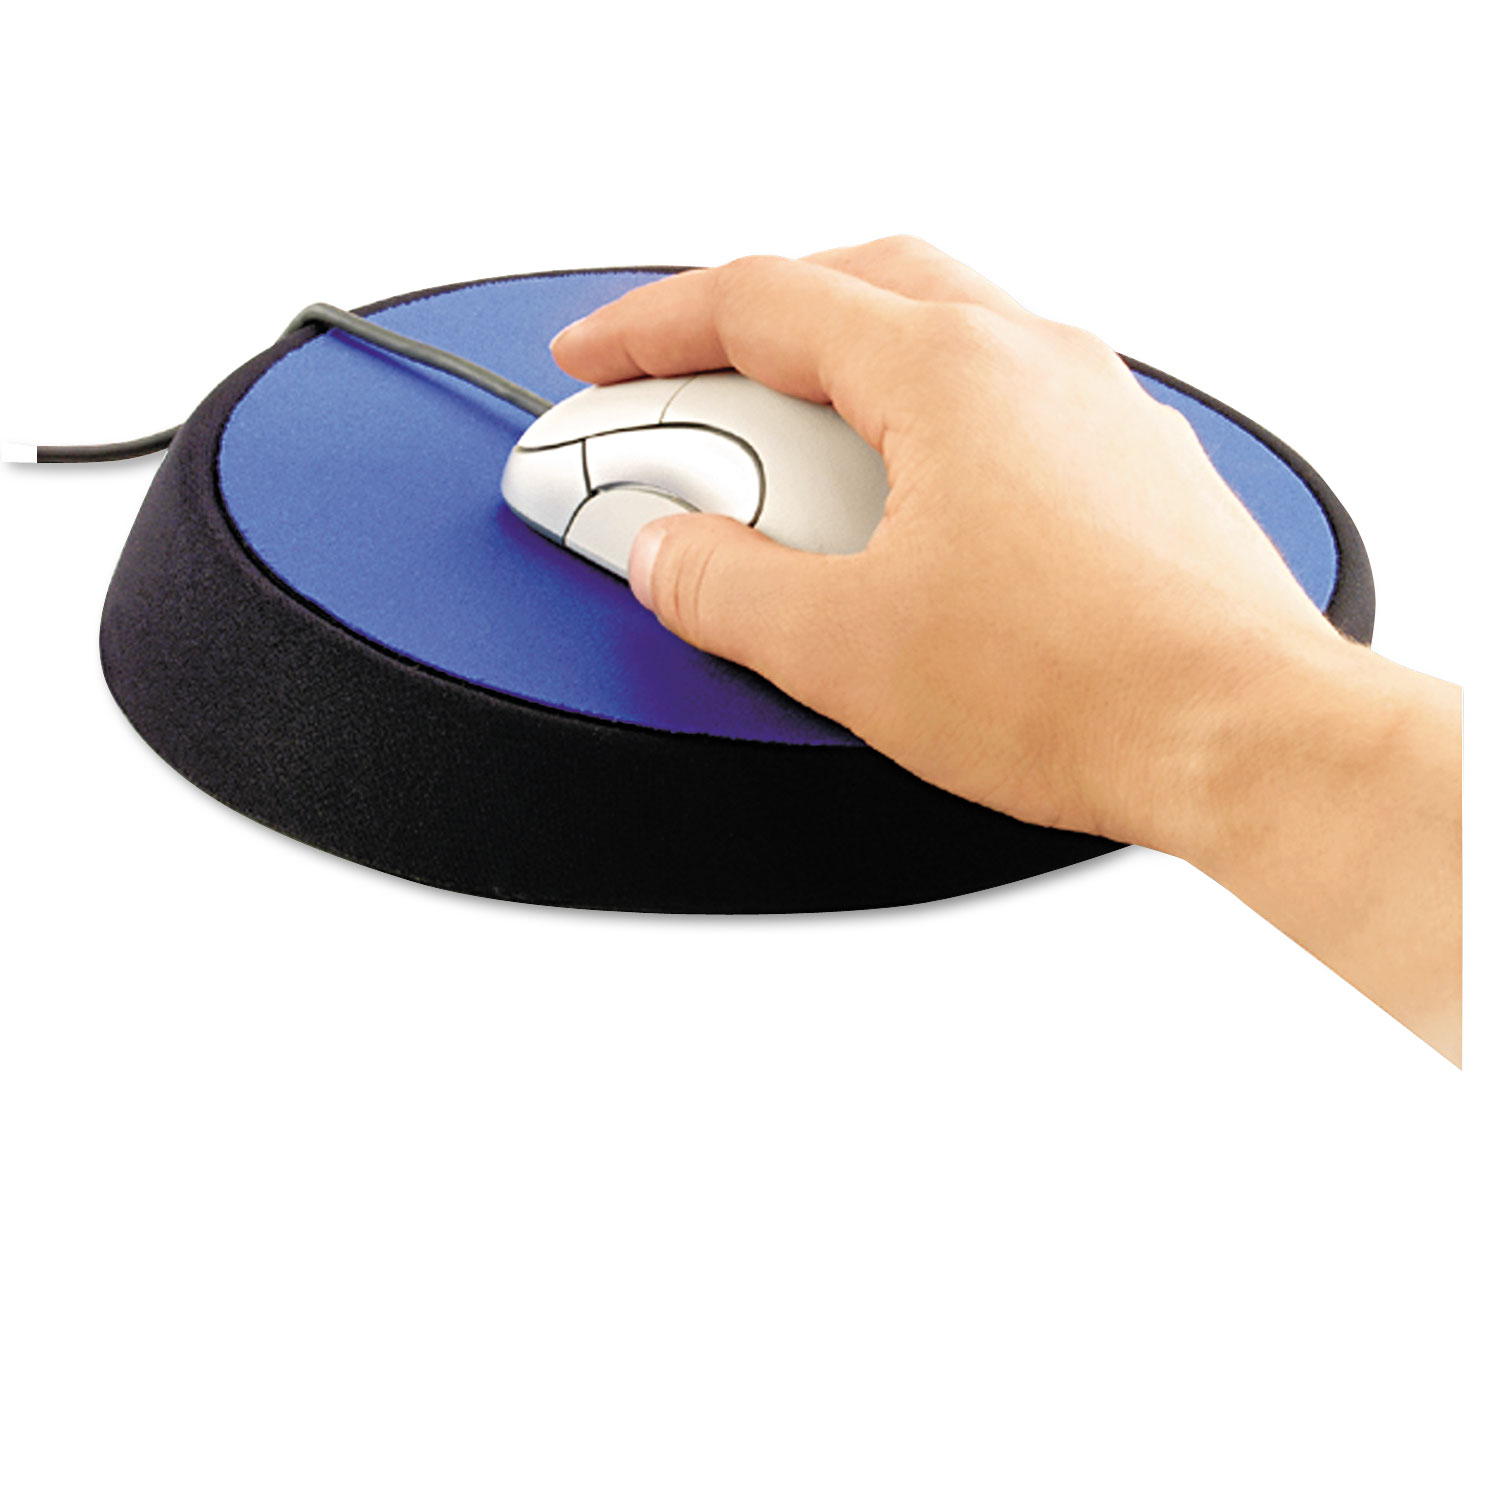  Allsop 26226 Wrist Aid Ergonomic Circular Mouse Pad, 9 dia., Cobalt (ASP26226) 